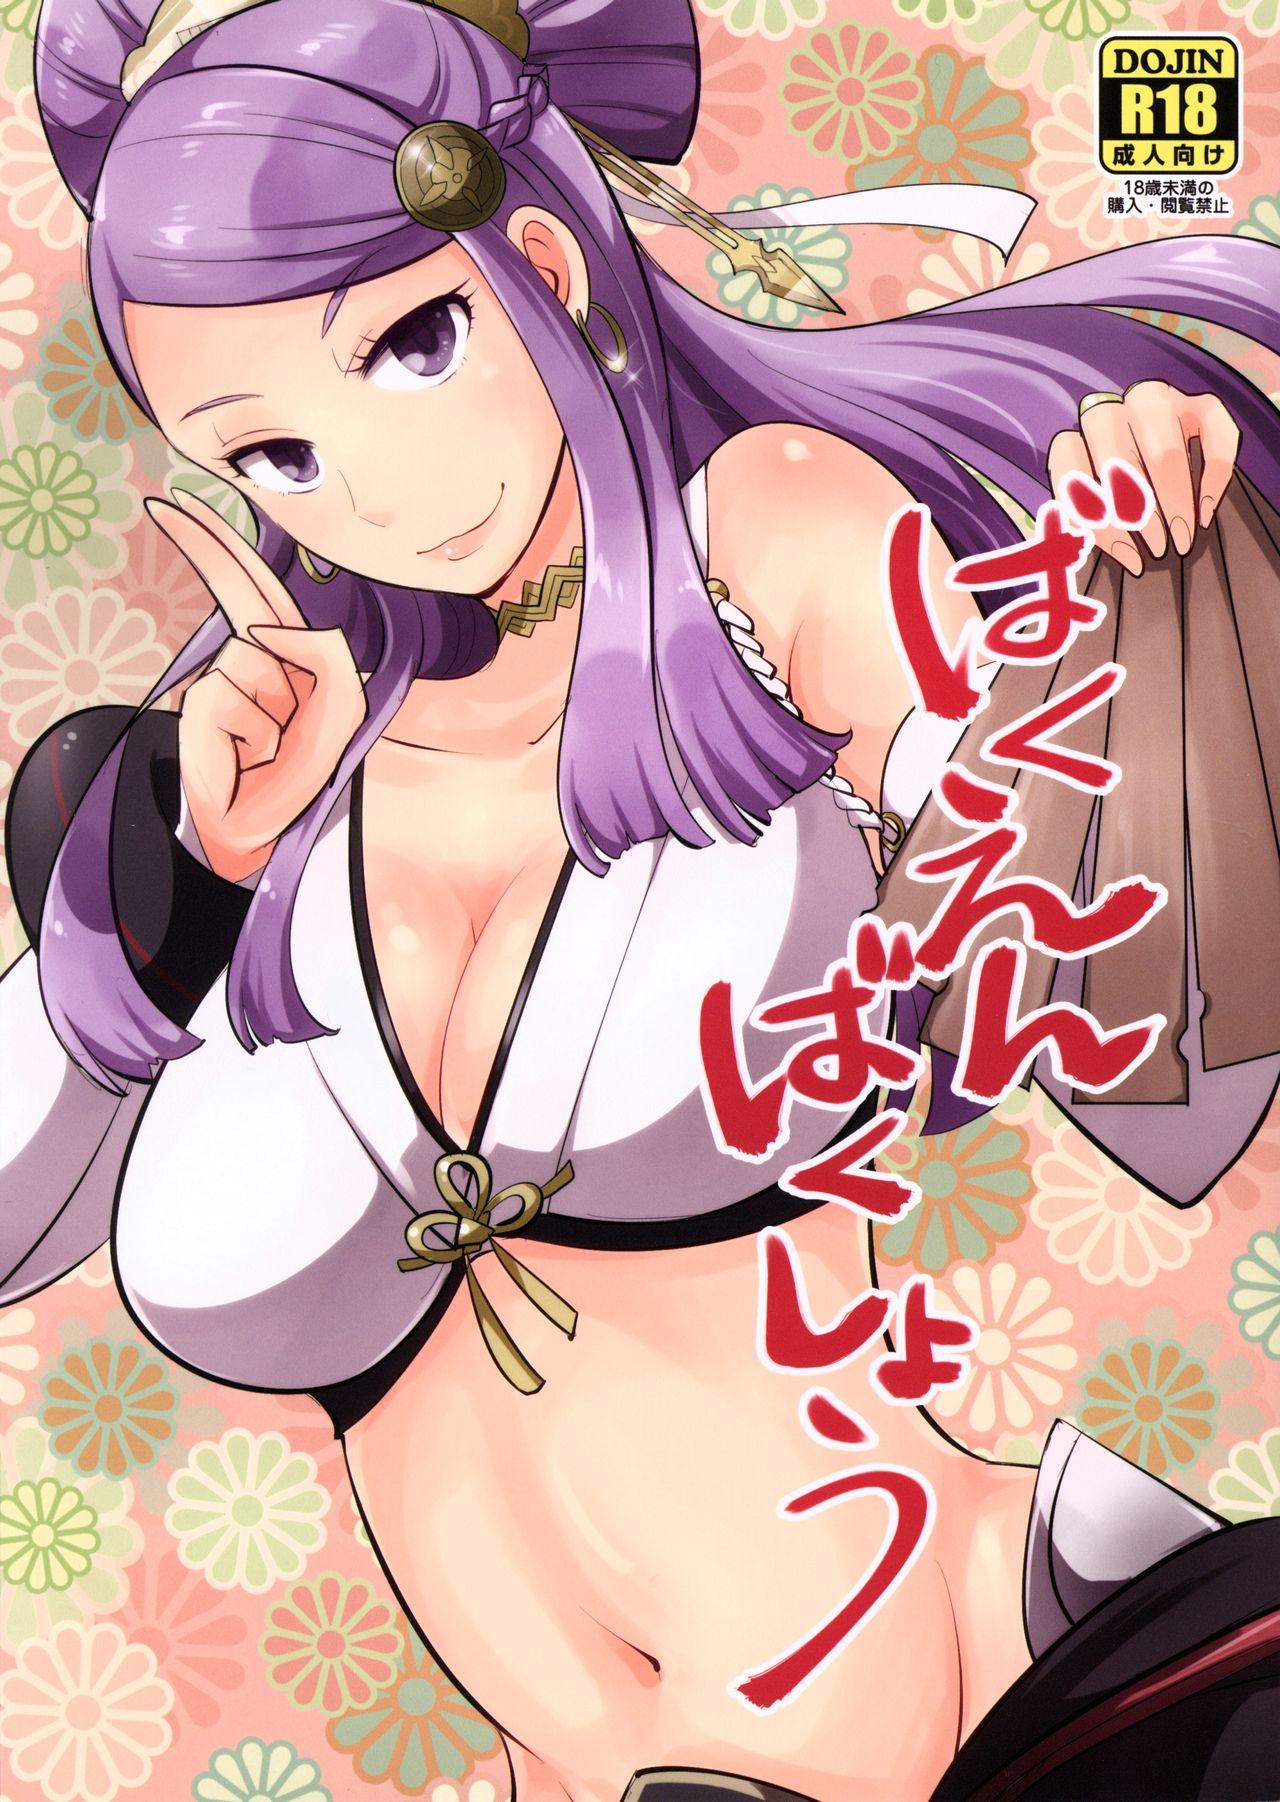 Mature Bakuen Bakushou - Fire emblem if Horny Sluts - Picture 1